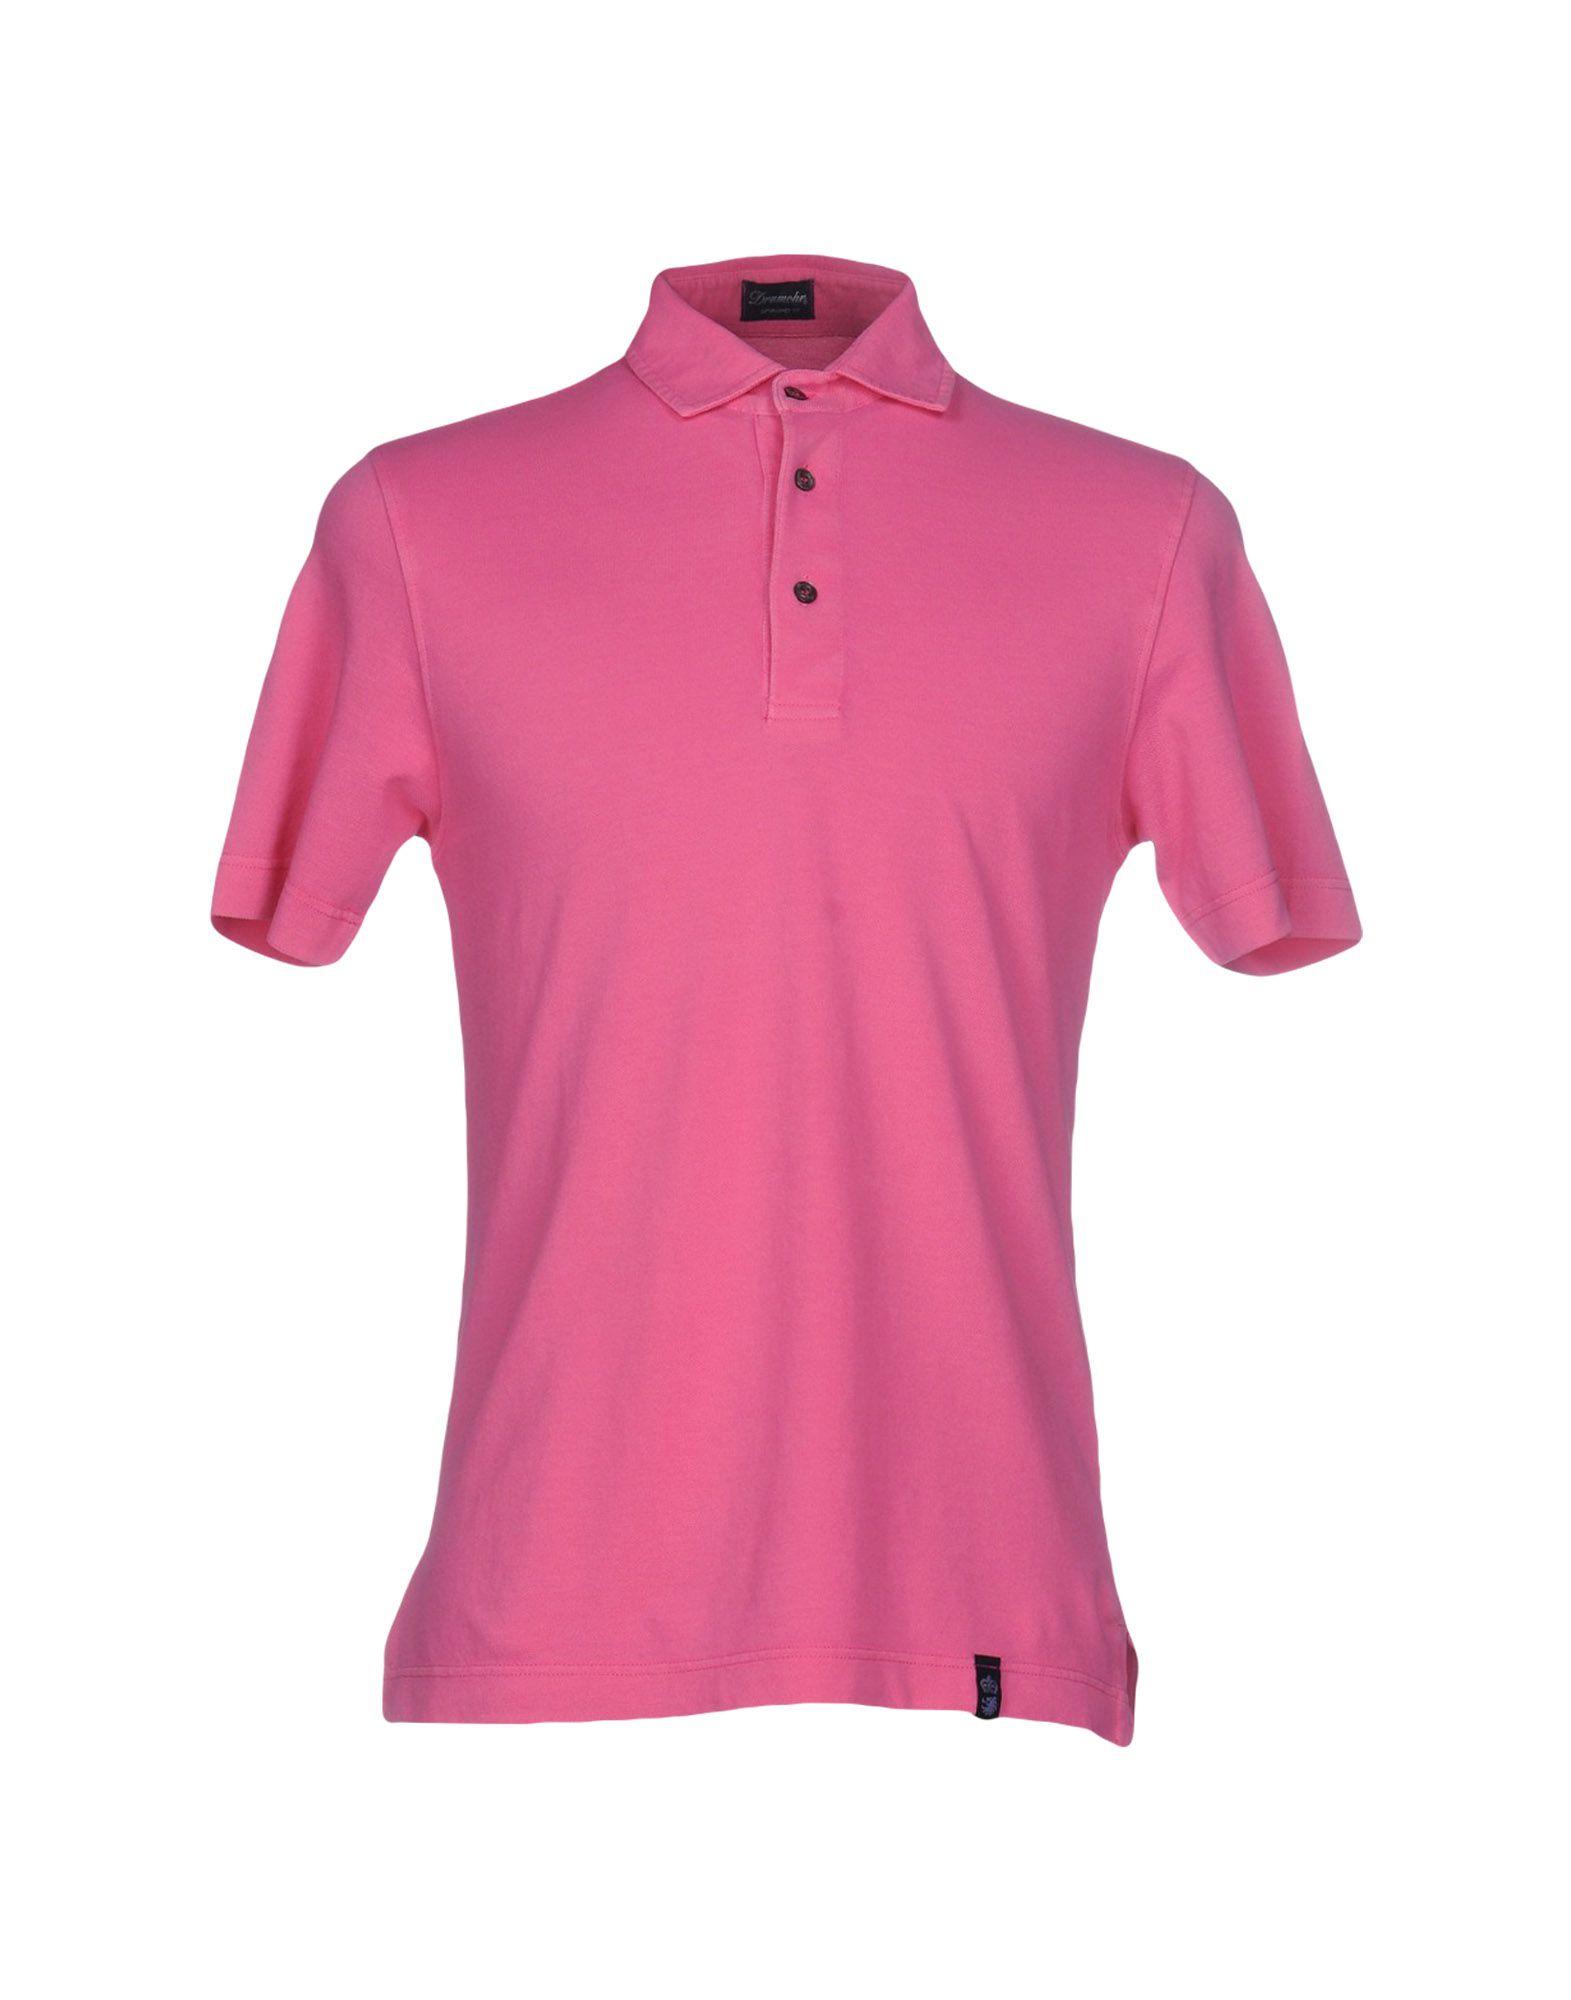 Lyst - Drumohr Polo Shirt in Purple for Men